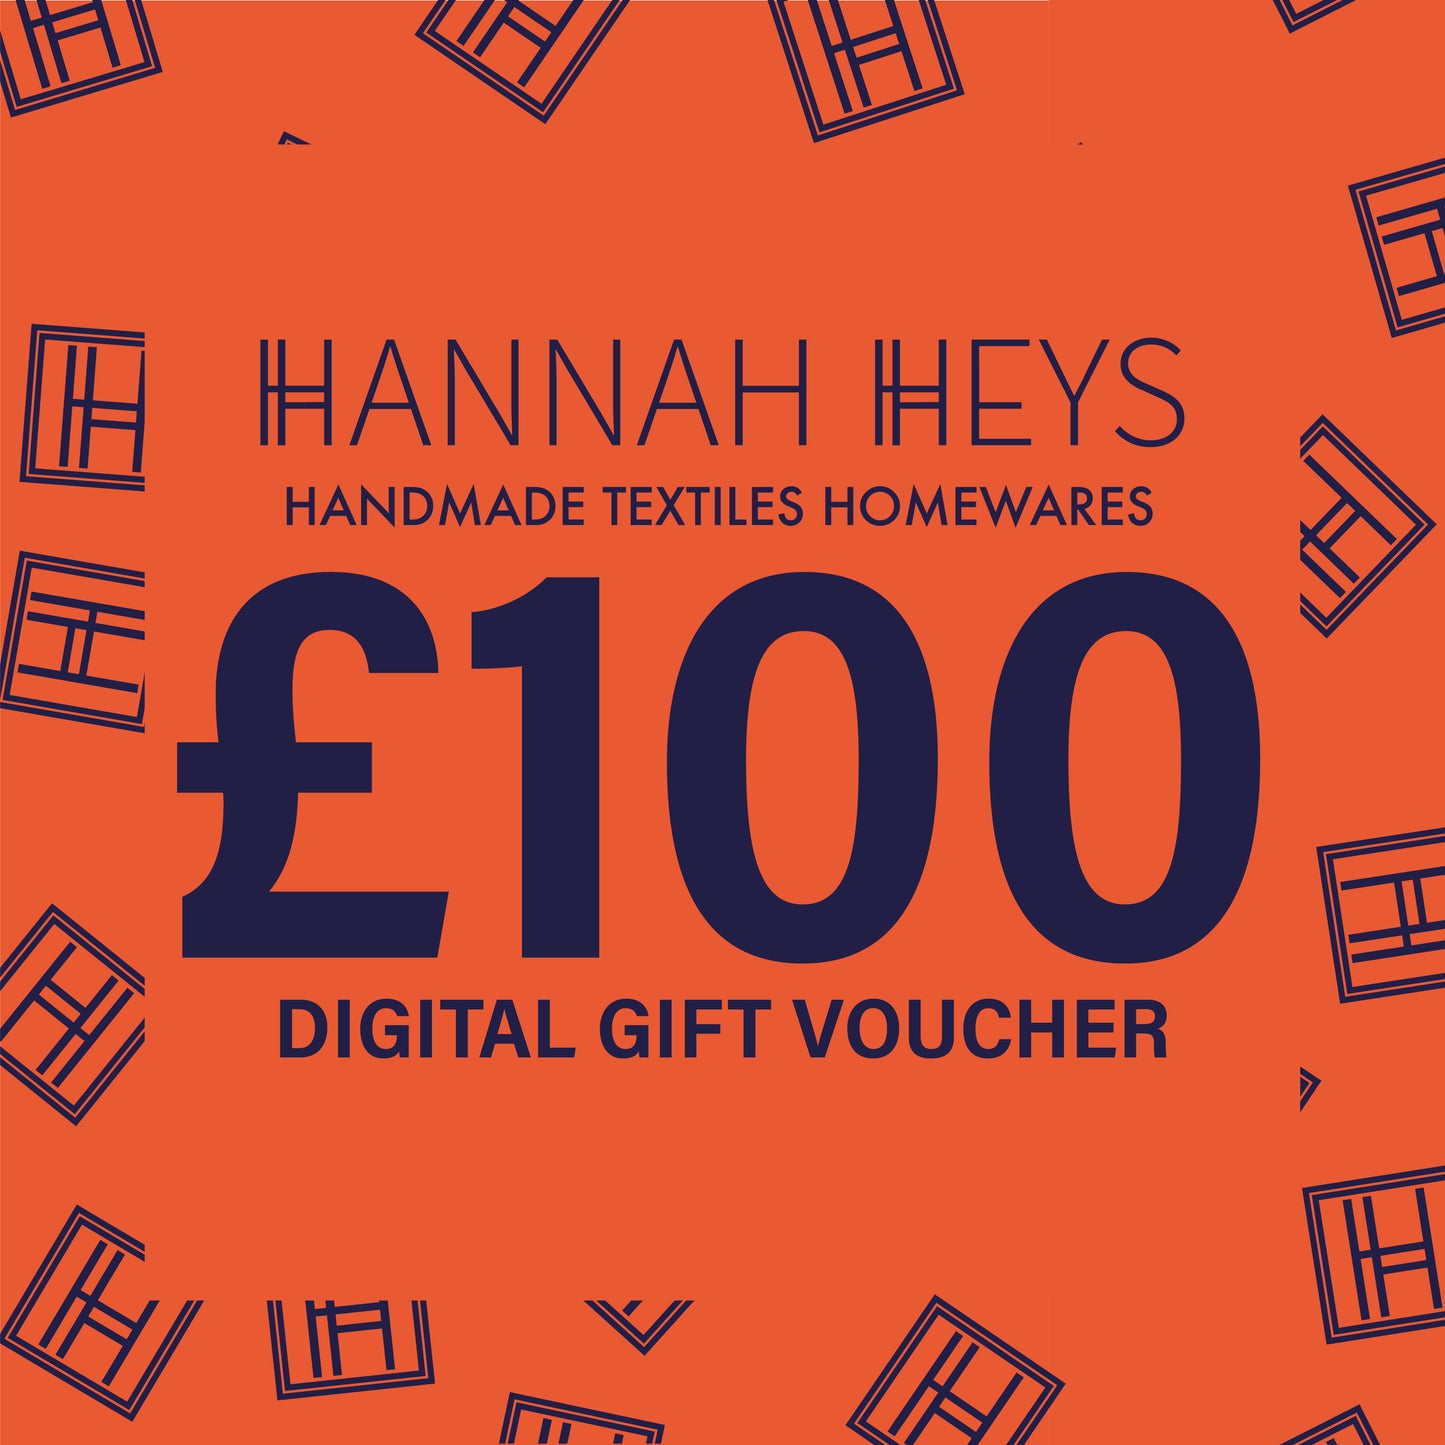  Bright Orange Image with Dark Purple Lettering, advertising a £100 Digital Gift Voucher for Hannah Heys Textiles.